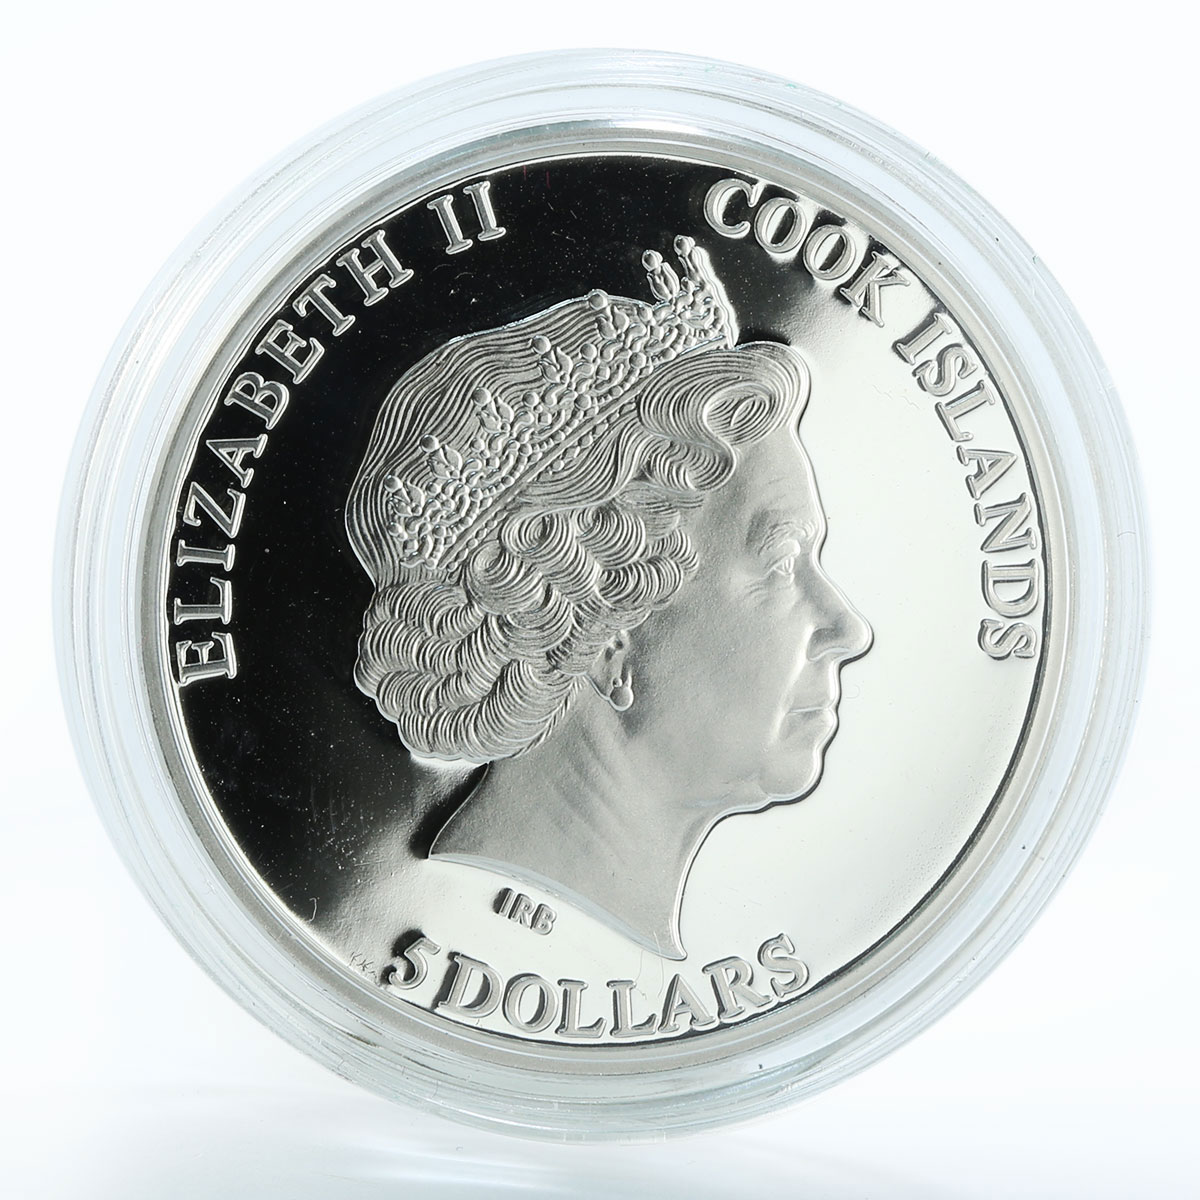 Cook Islands 5 dollars PGA Tour - Golf ball silver proof coin 2012